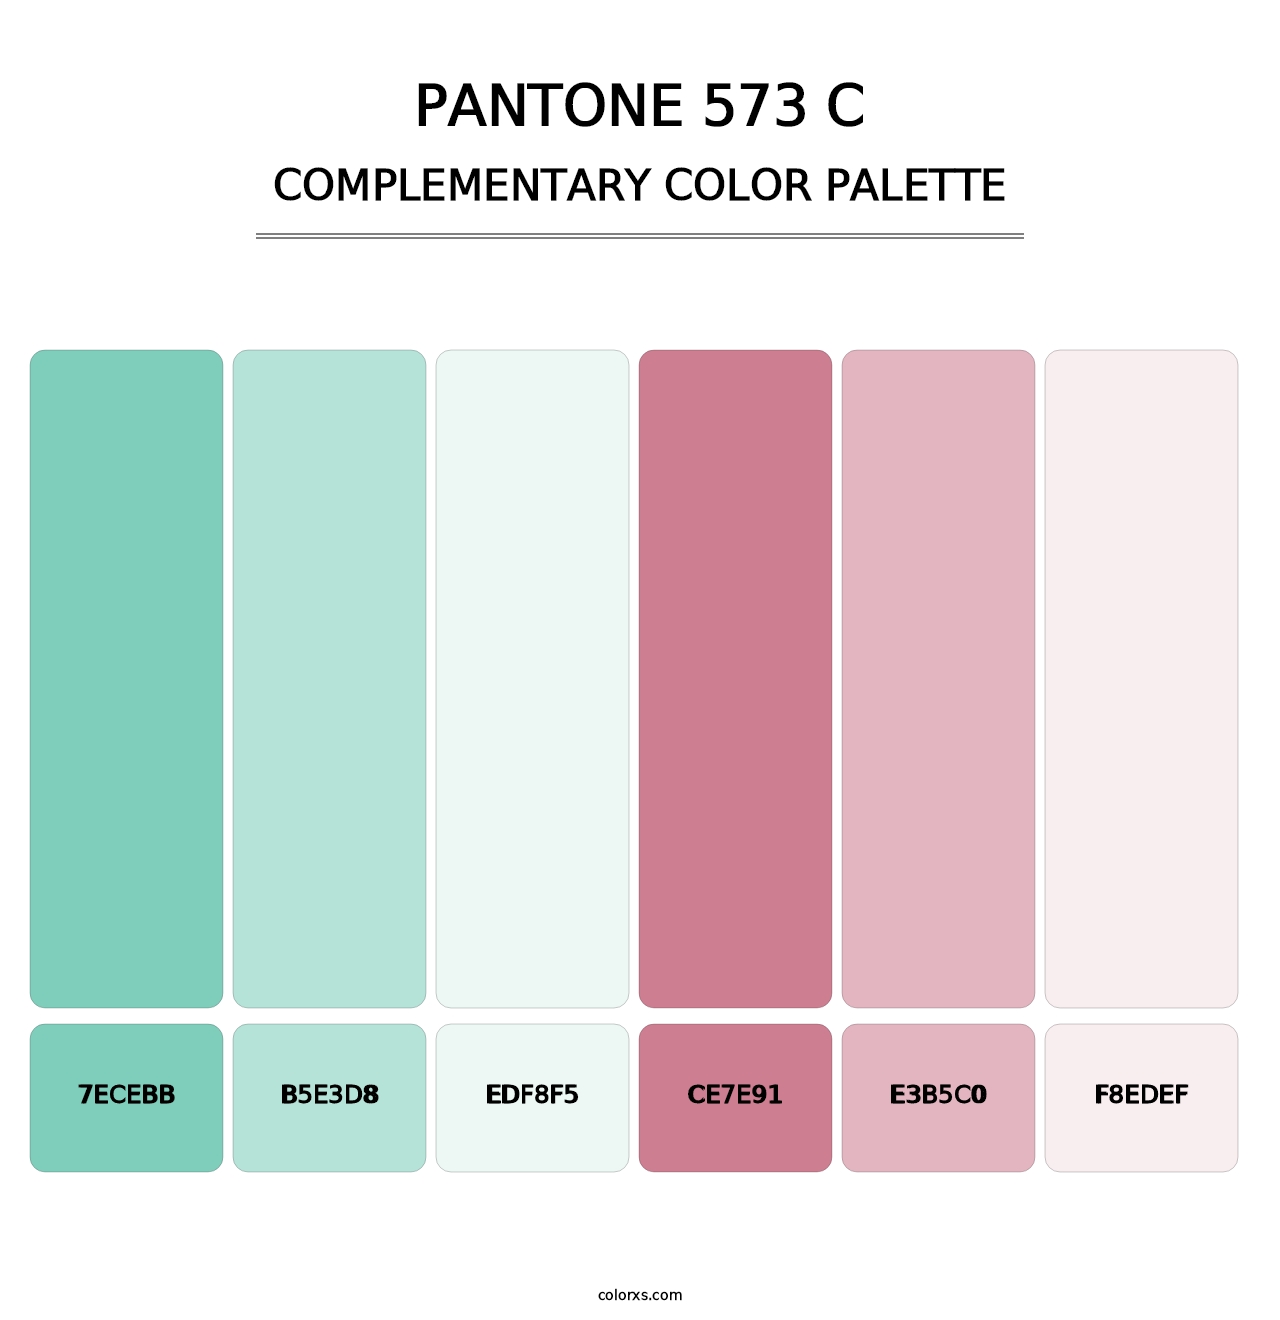 PANTONE 573 C - Complementary Color Palette